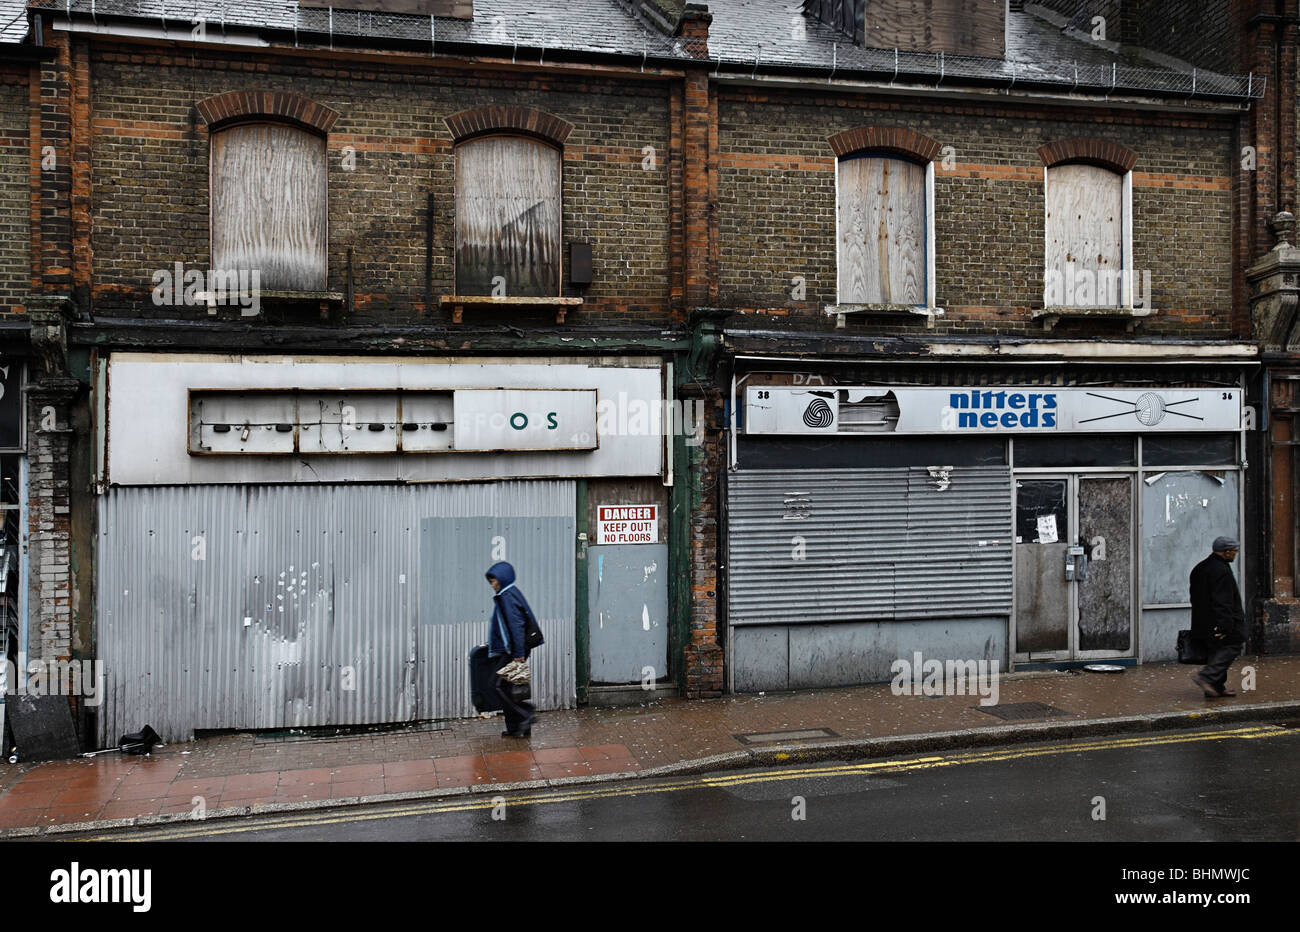 Hilera de tiendas ruinosas Station Road, Croydon. Foto de stock